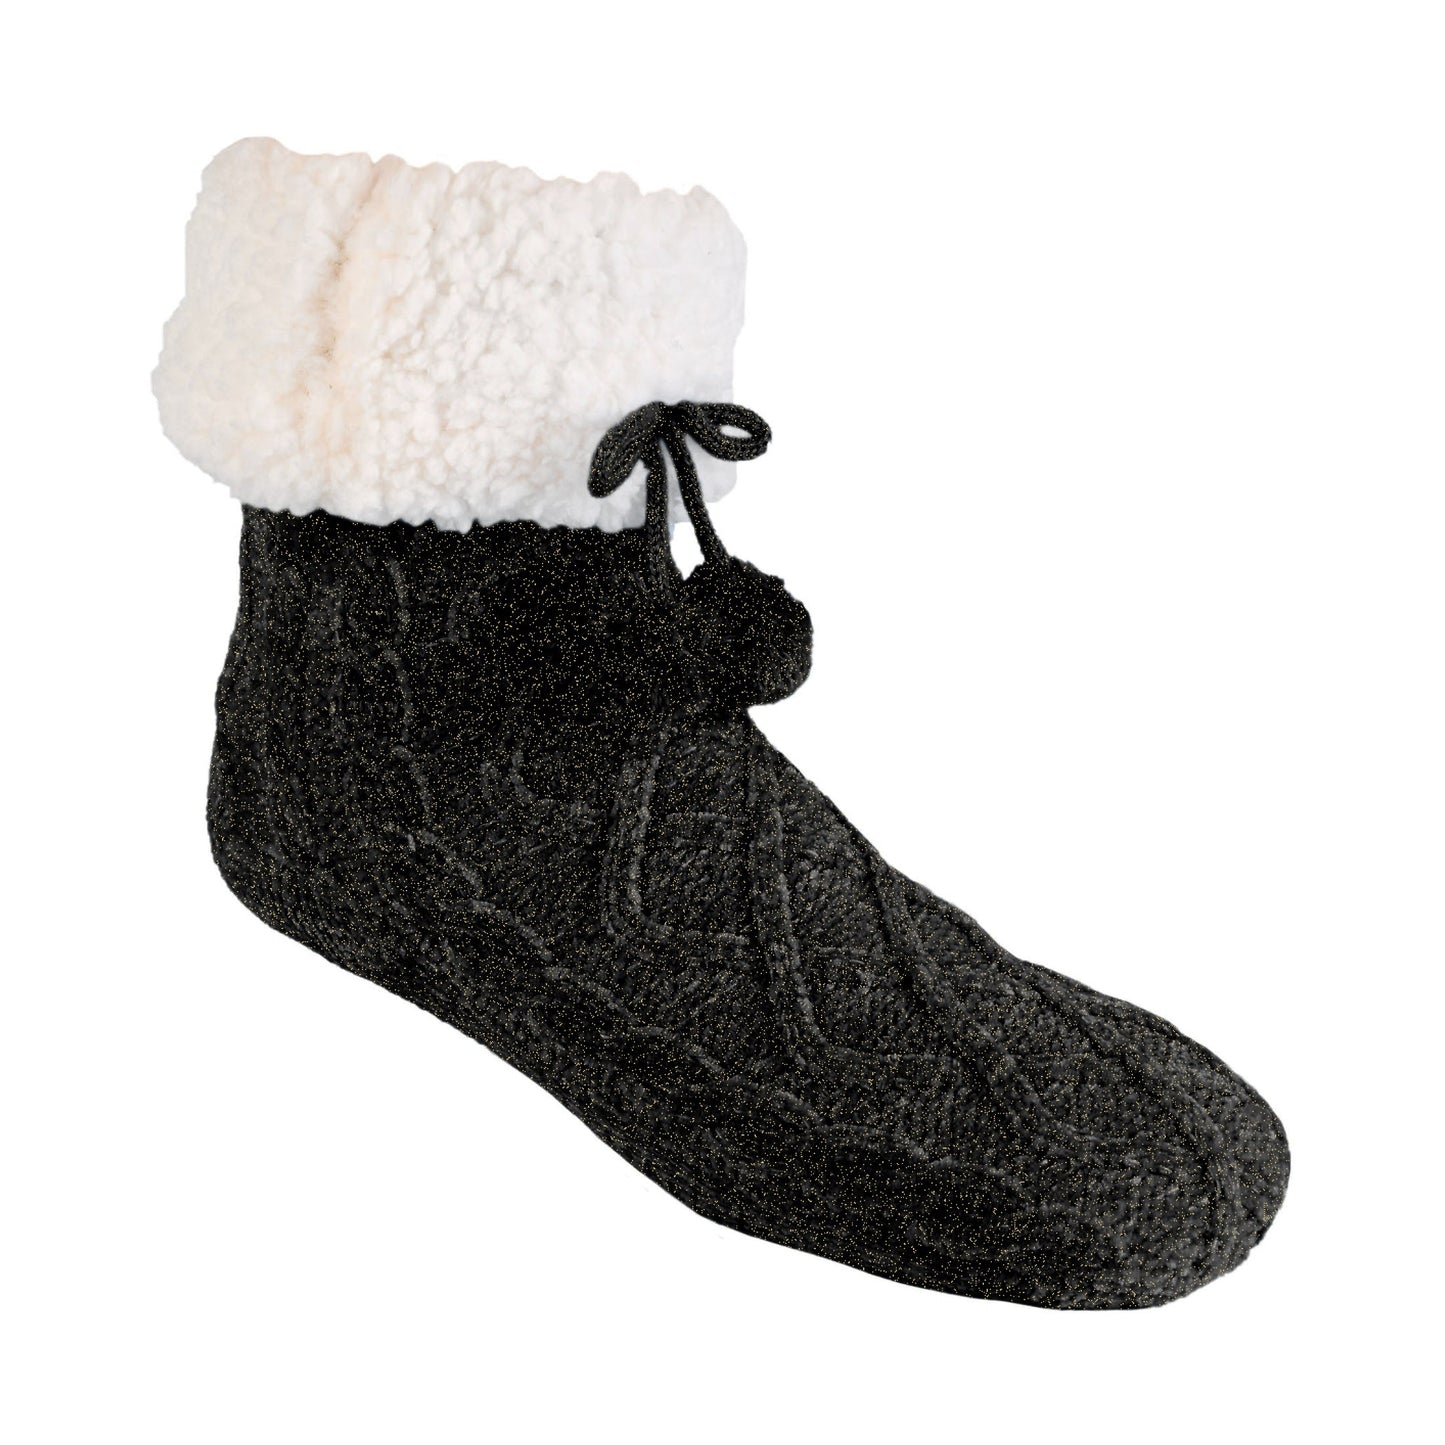 Chenille Knit Holiday Black - Recycled Slipper Socks